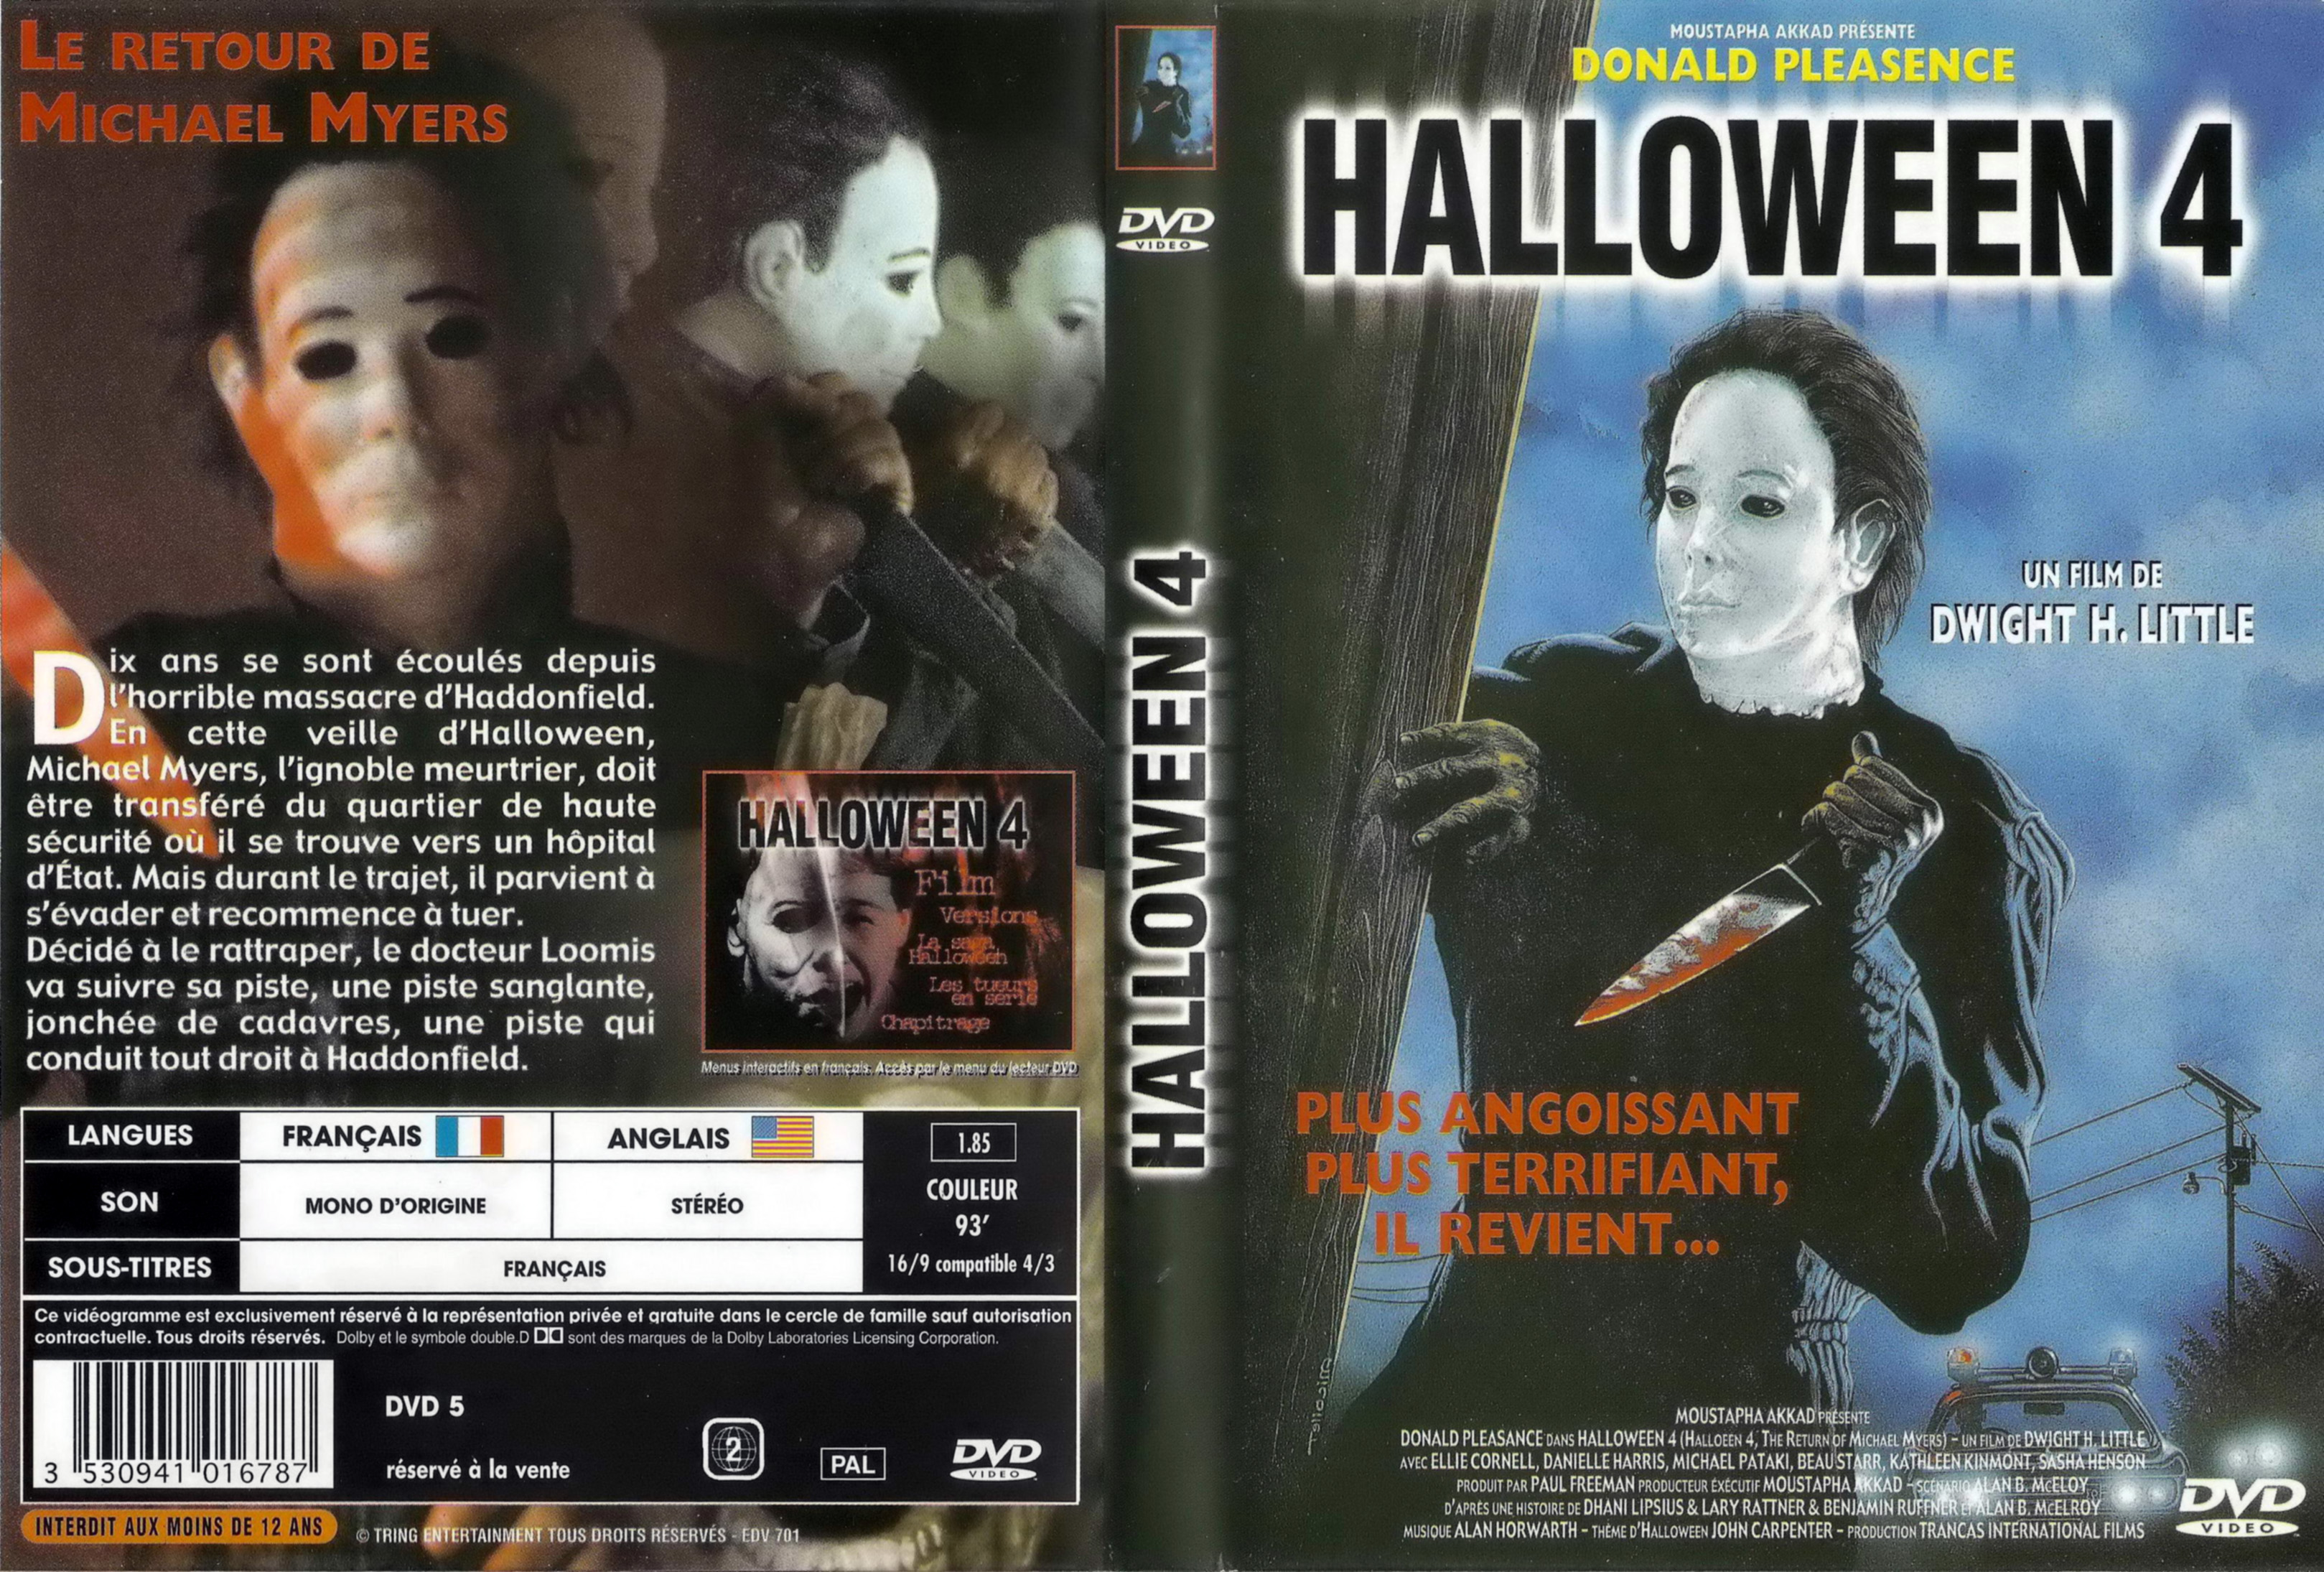 Jaquette DVD Halloween 4 v2